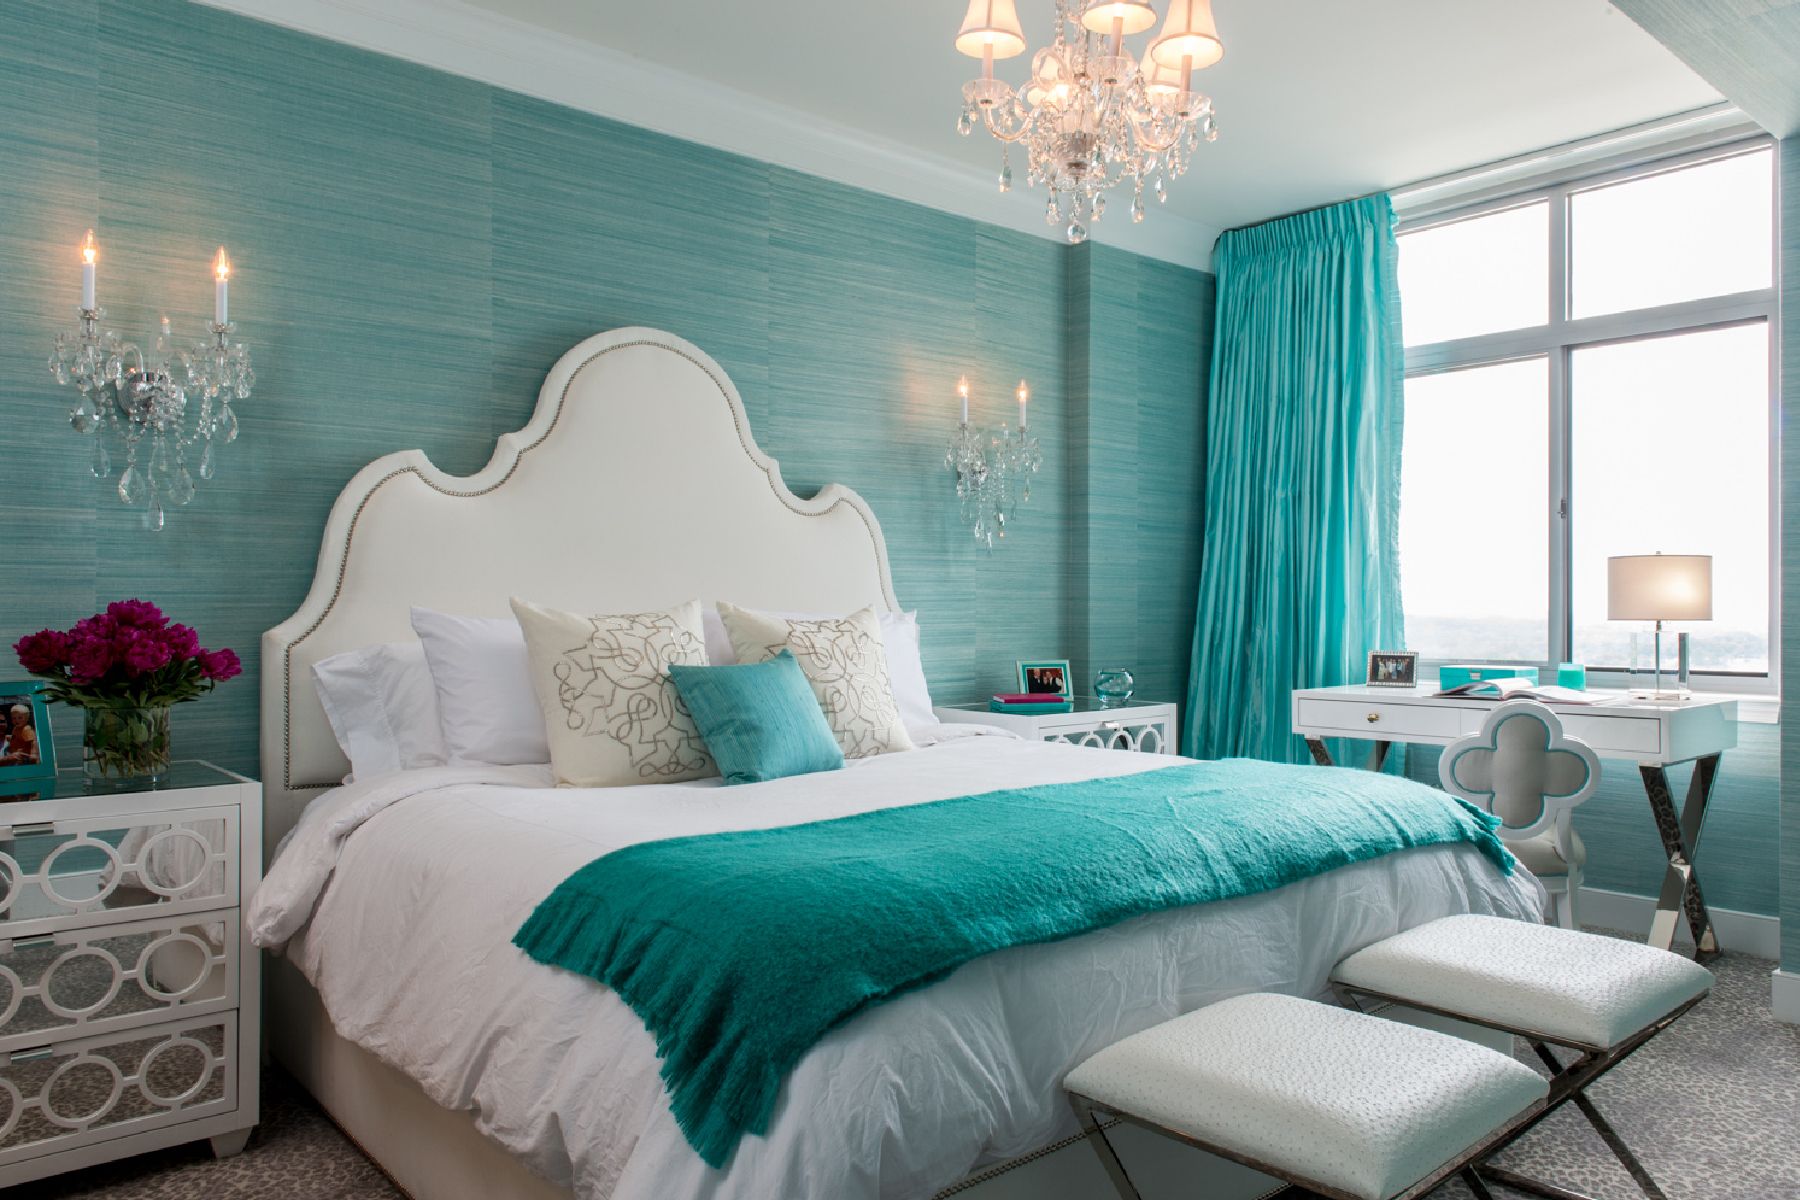 Blue Room Ideas: 27 Fresh Decor Schemes To Inspire You